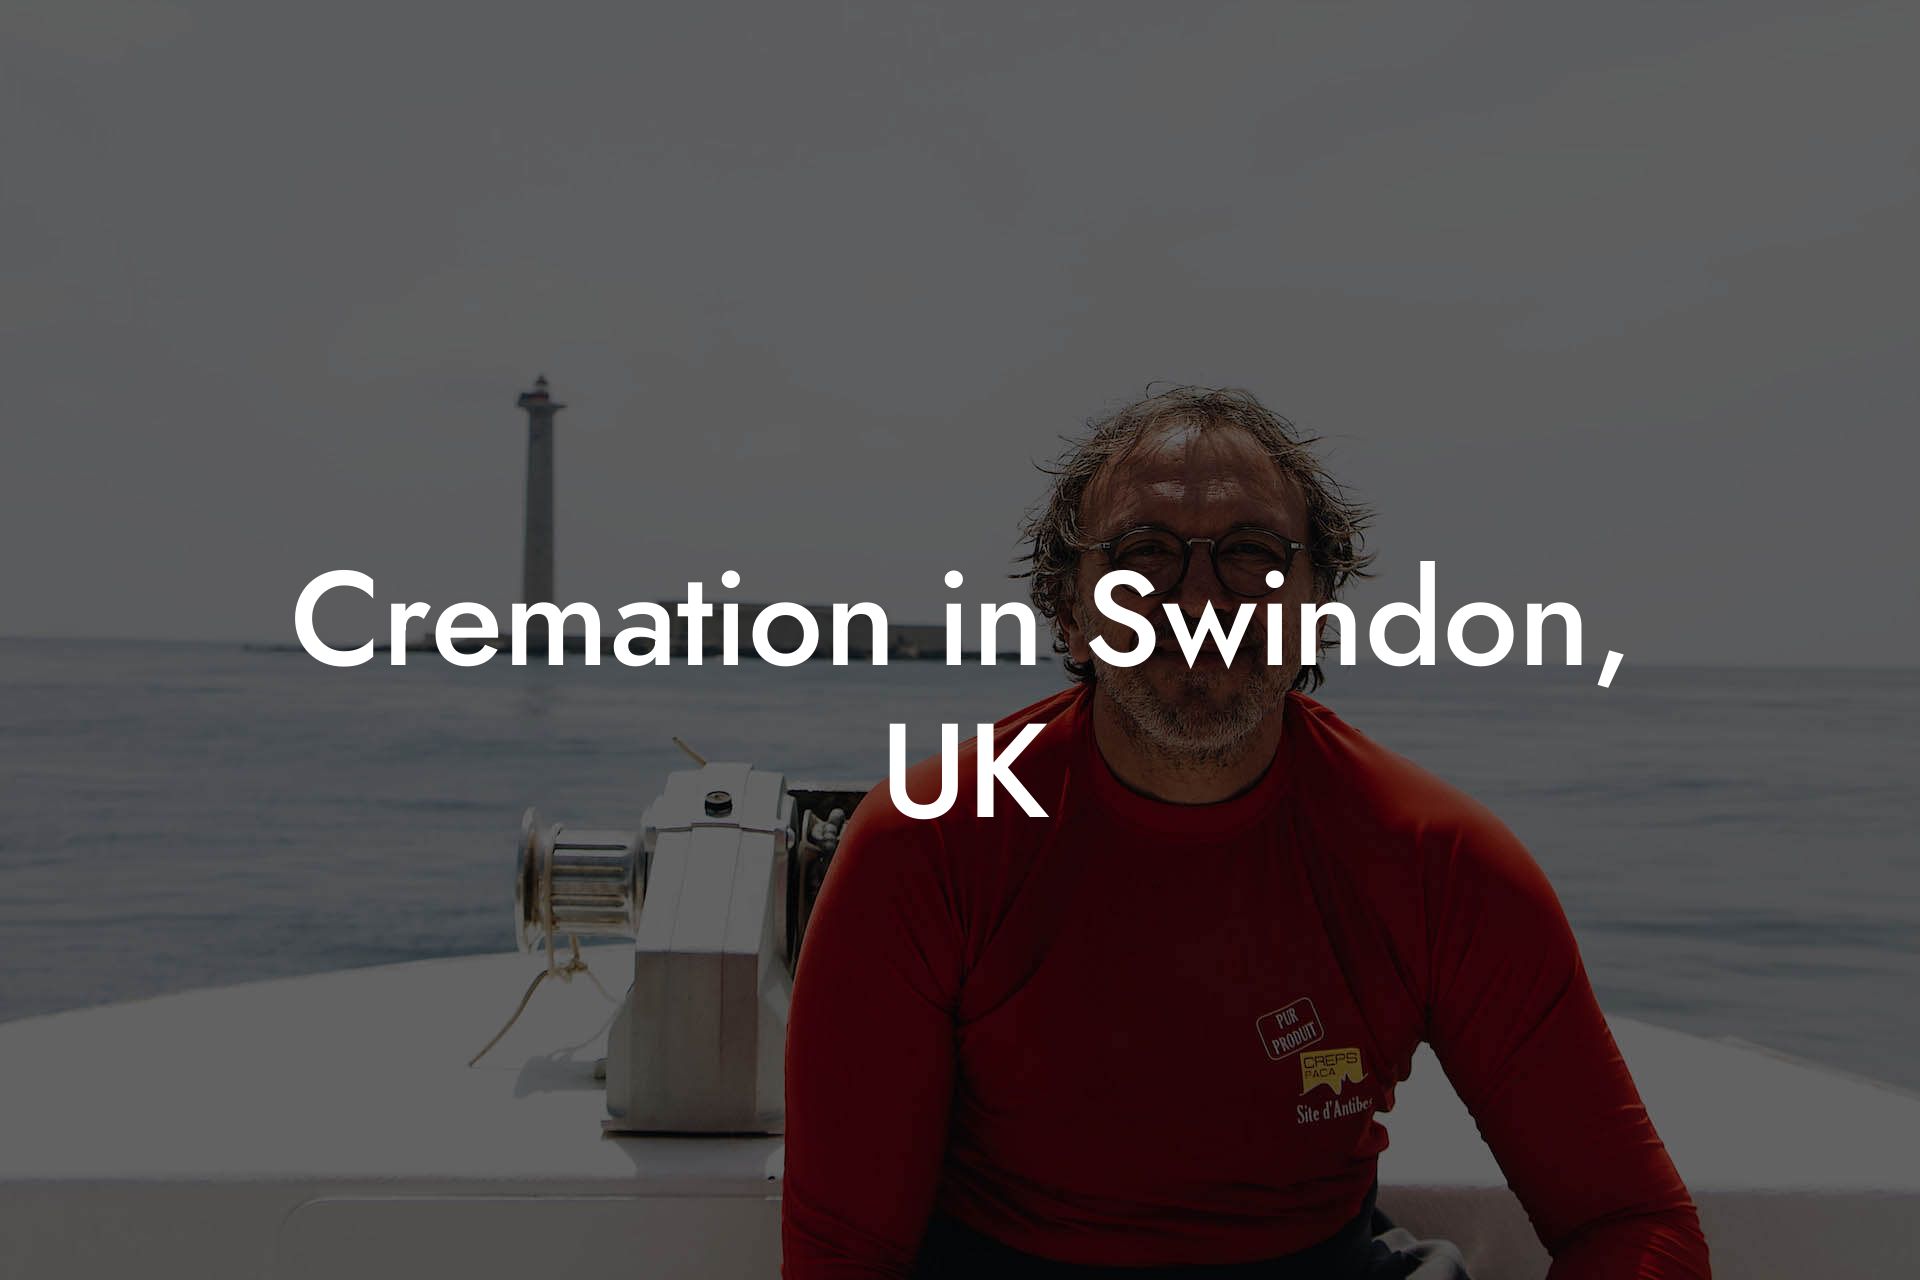 Cremation in Swindon, UK